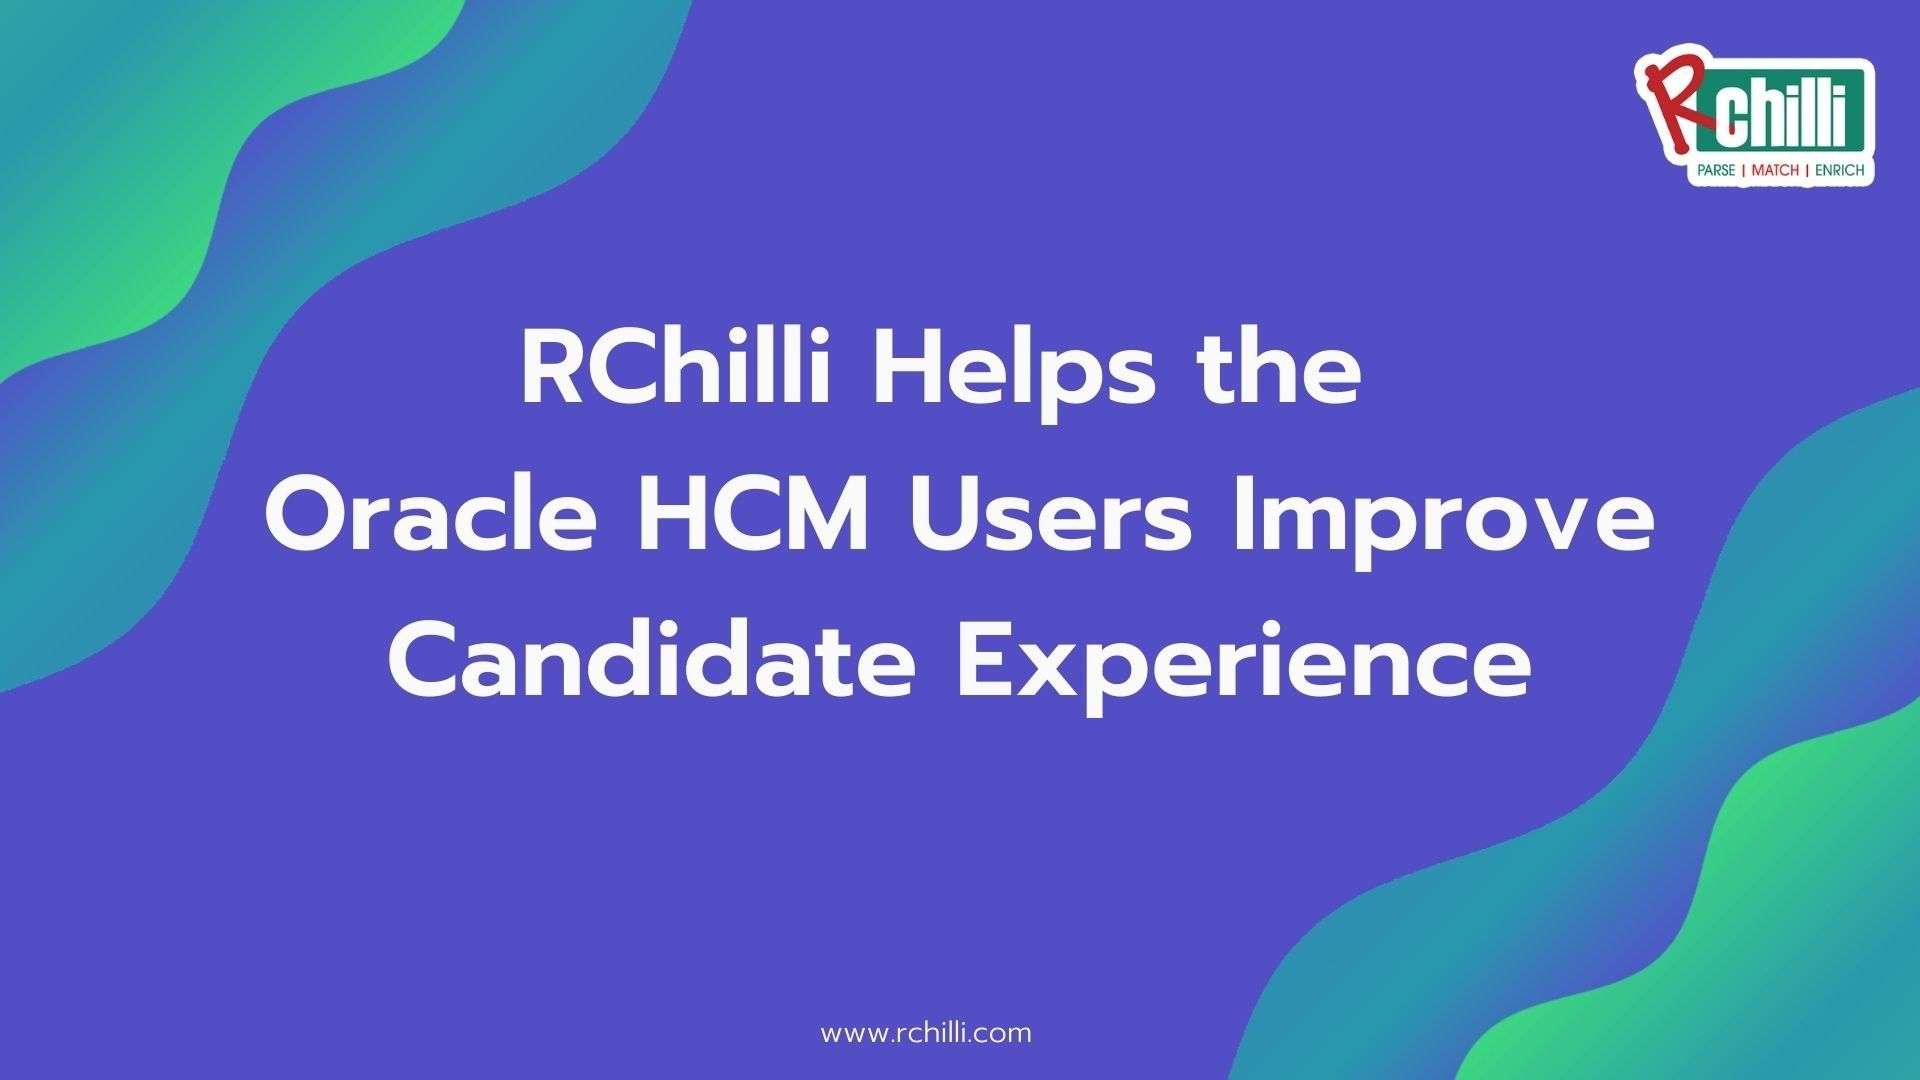 RChilli resume parser to improve CX